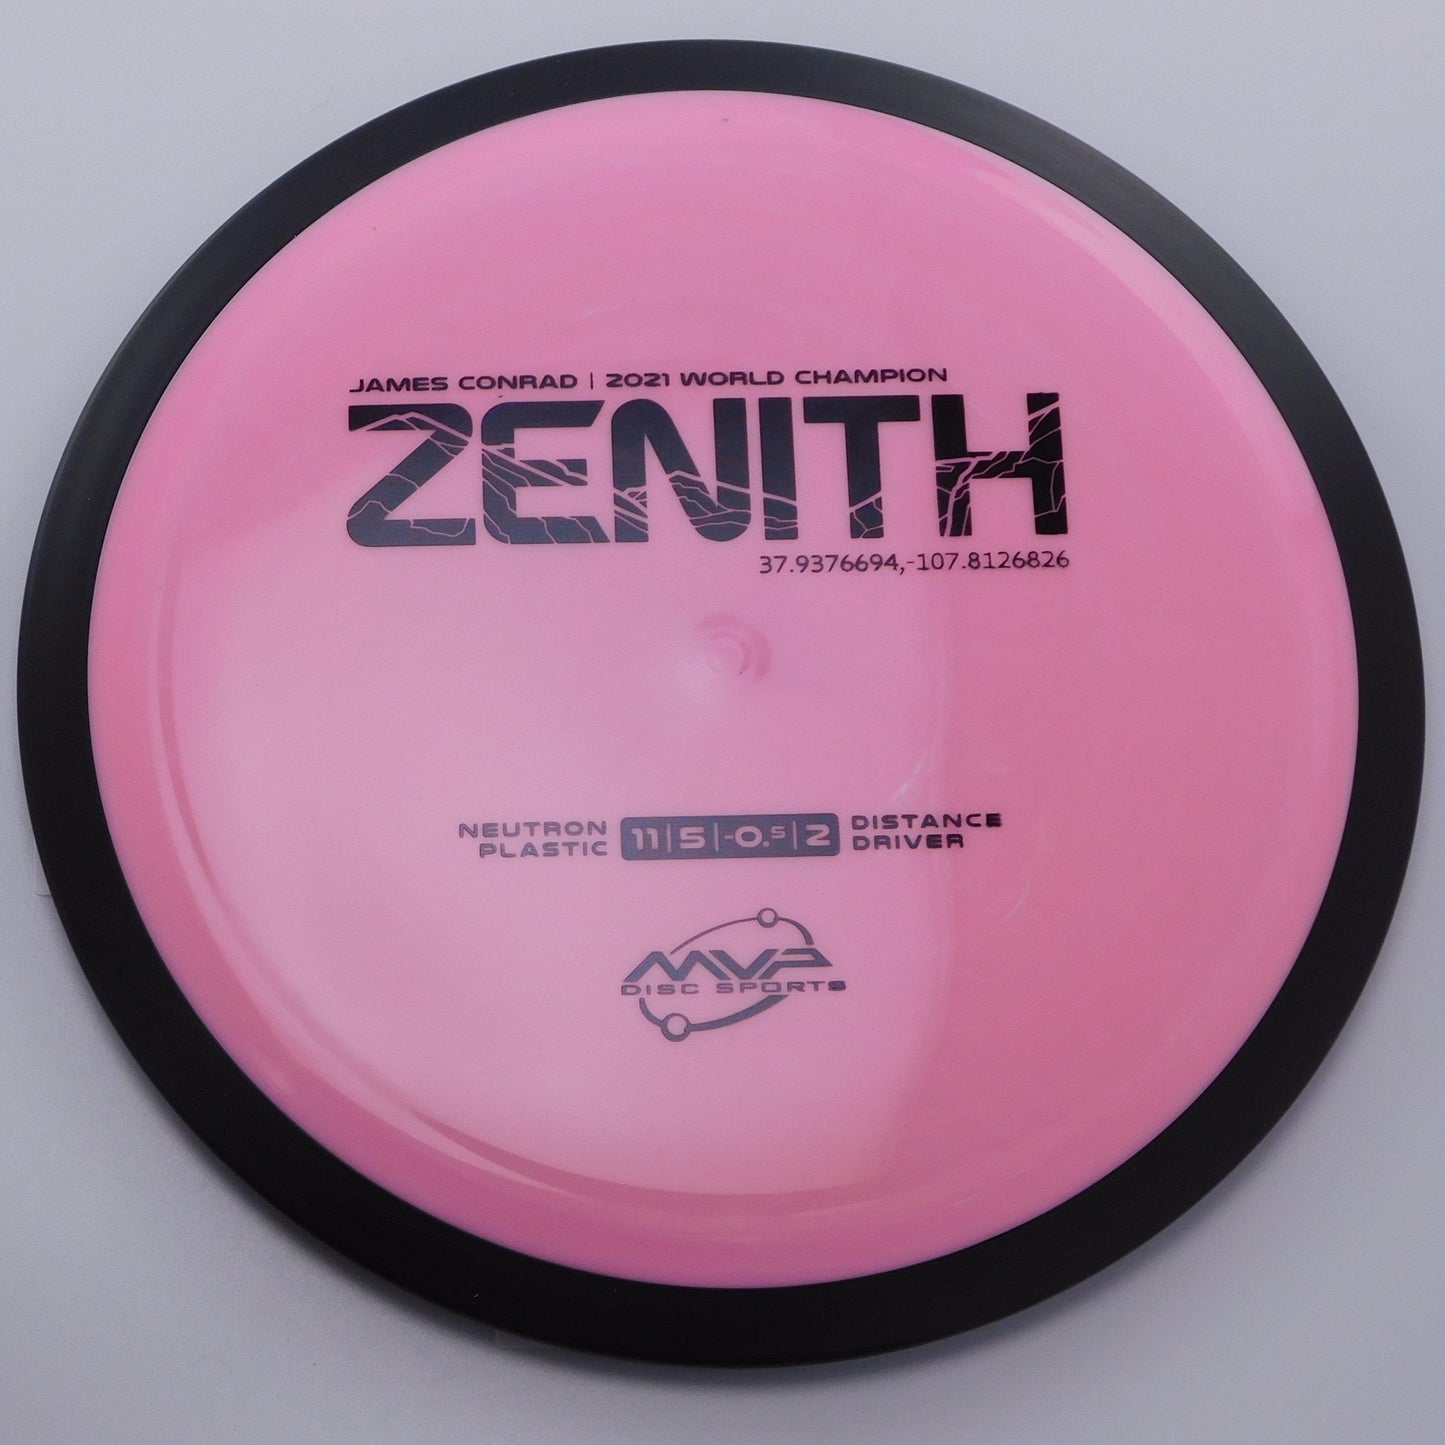 MVP Zenith - James Conrad - Neutron 11│5│-0.5│2 170.1g - Pink - MVP Zenith - Neutron - 100469